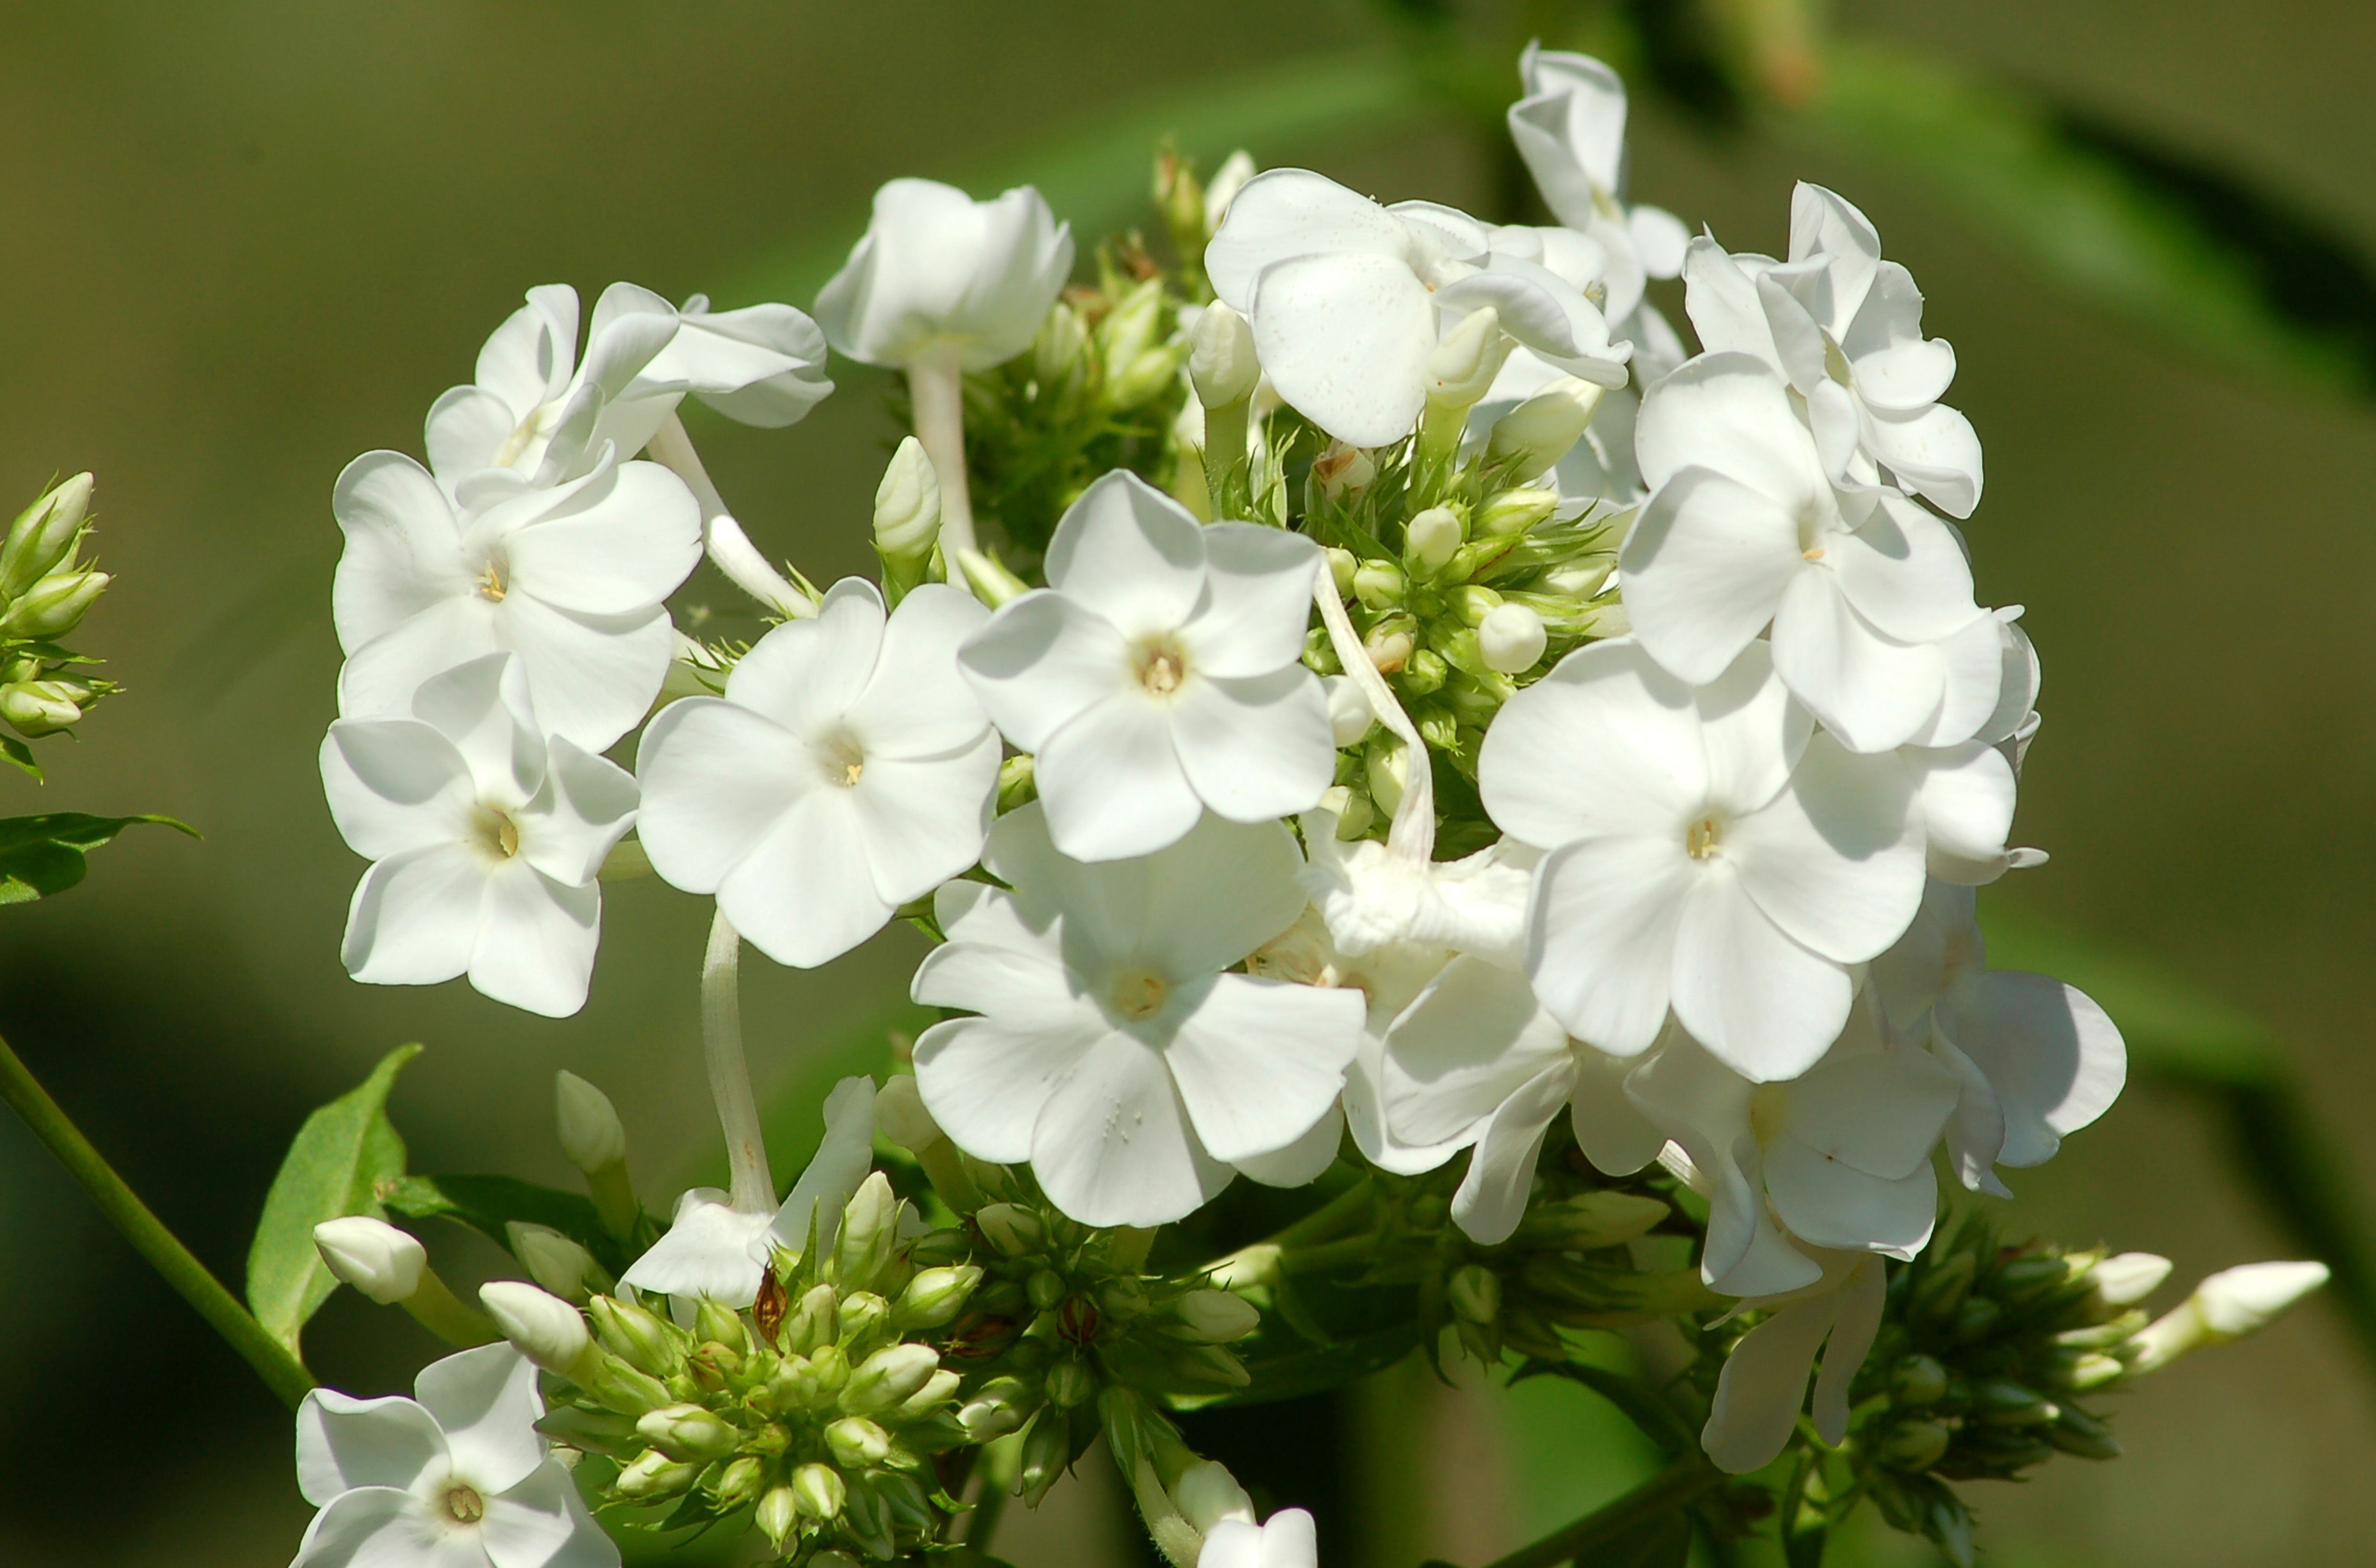 Grow 'David' Garden Phlox for White, Perennial Flowers